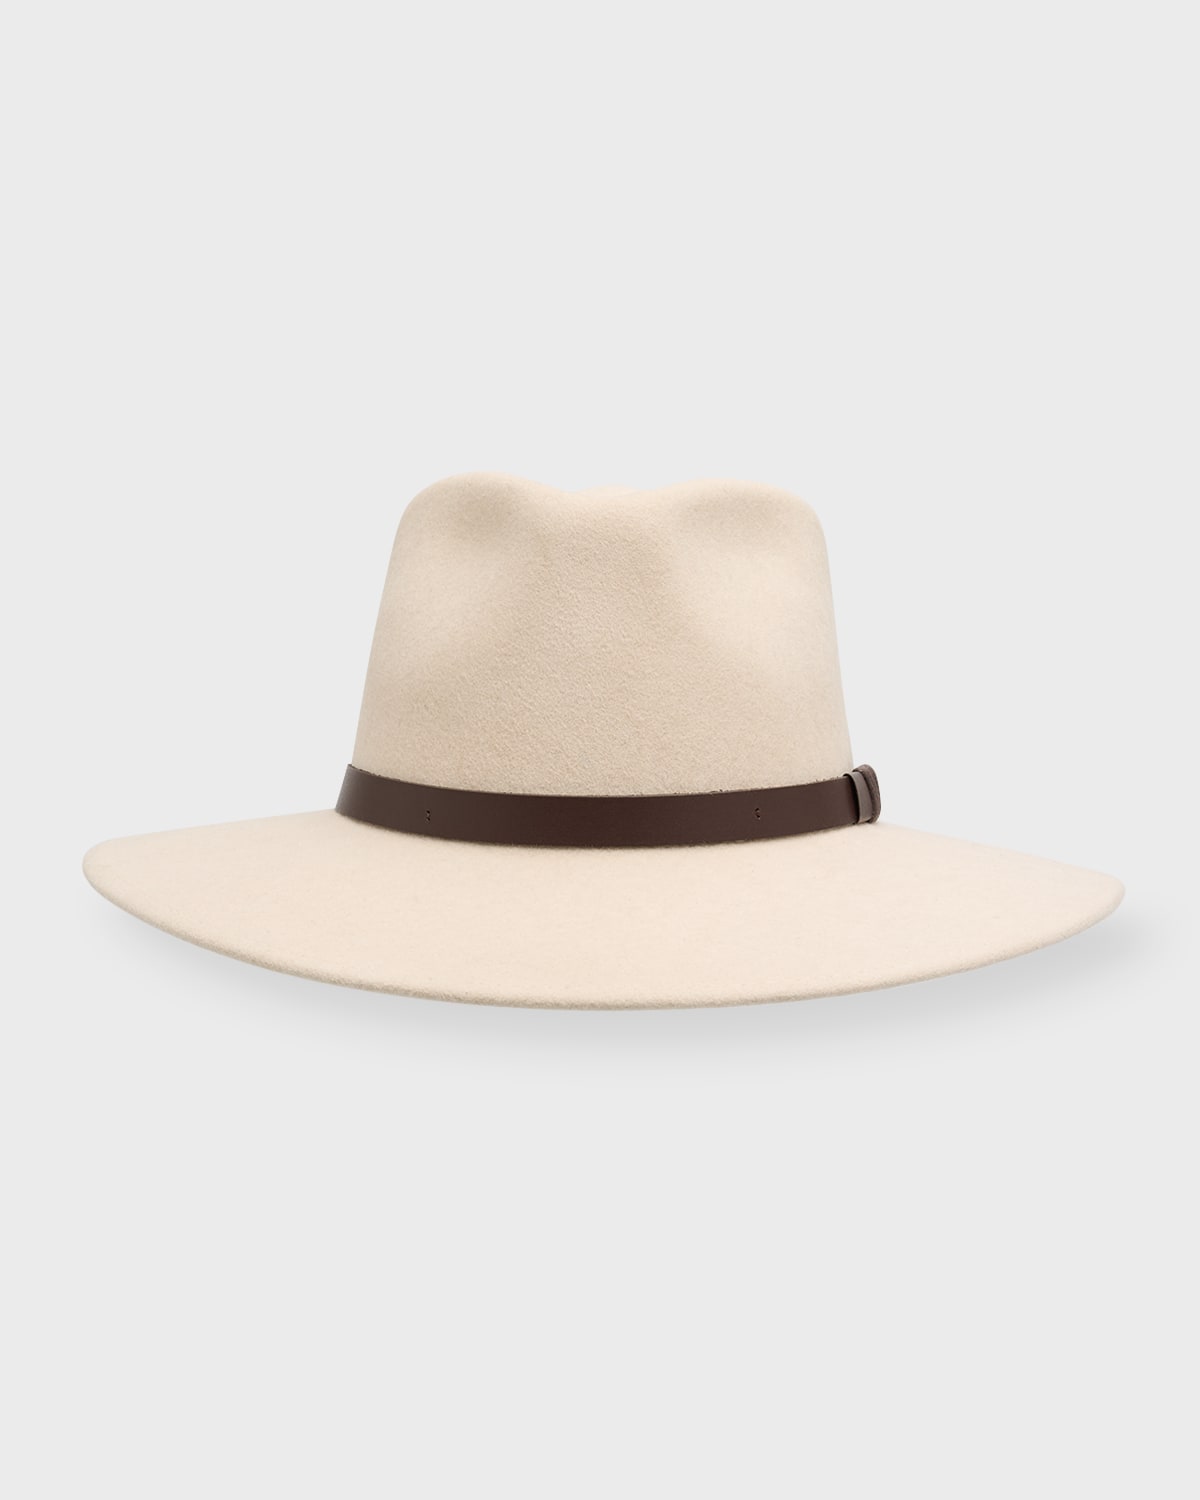 Sensi Studio Dundee Felt Cowboy Hat With Riveted Band In Khaki Unique